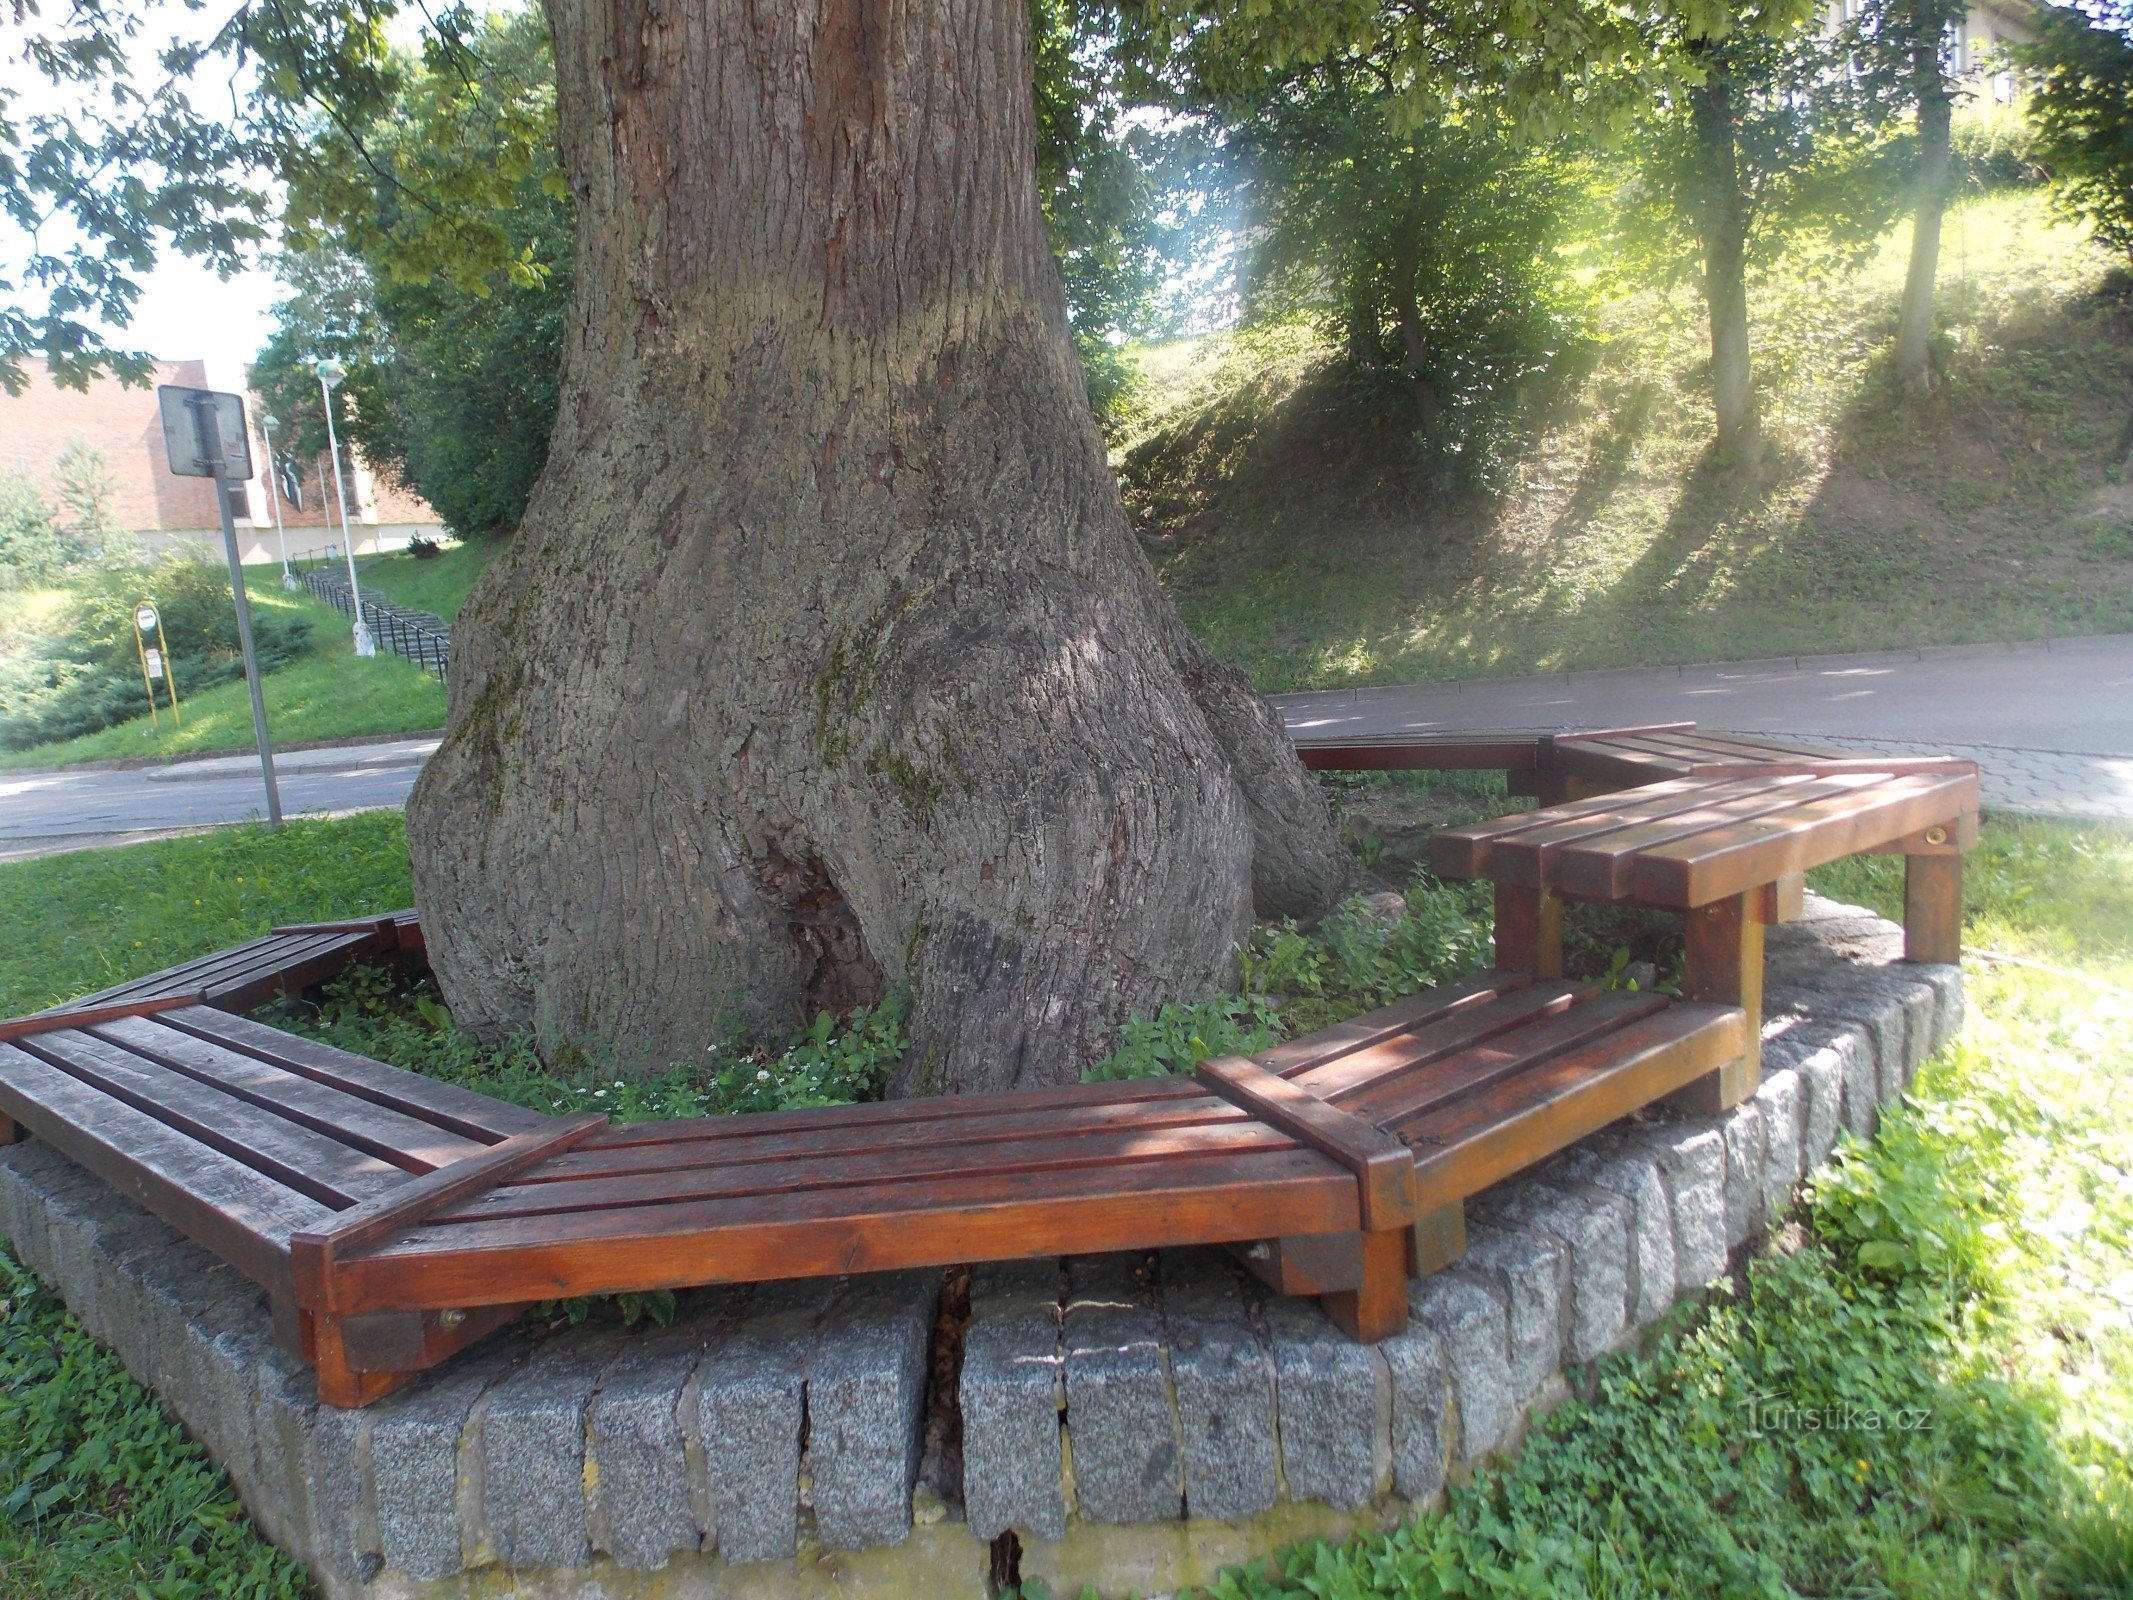 Una vecchia quercia memorabile a Jablonné nad Orlicí